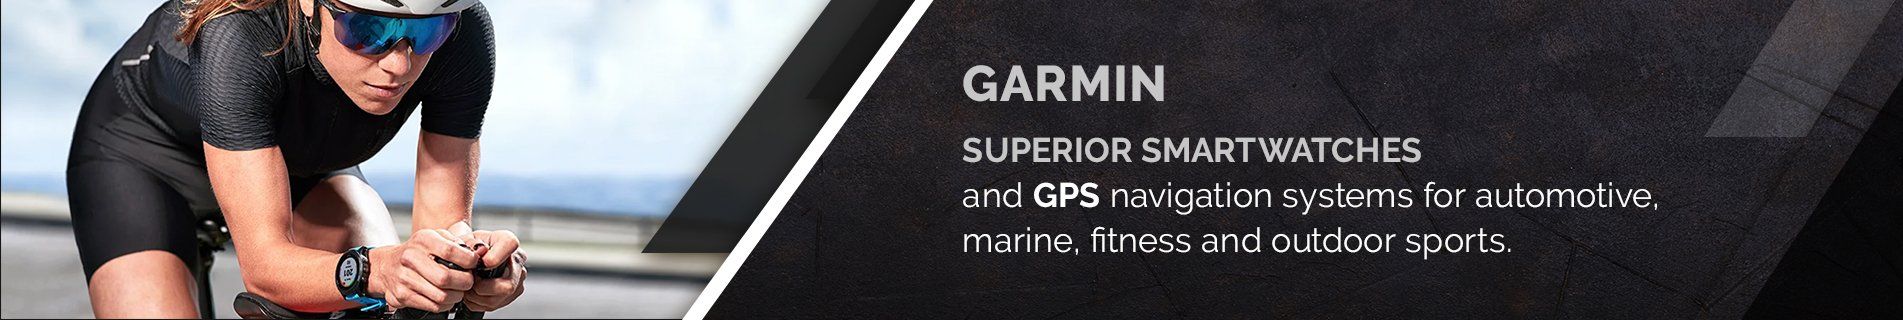 Garmin Satellite Communicators | Free Shipping | Authorized Dealer